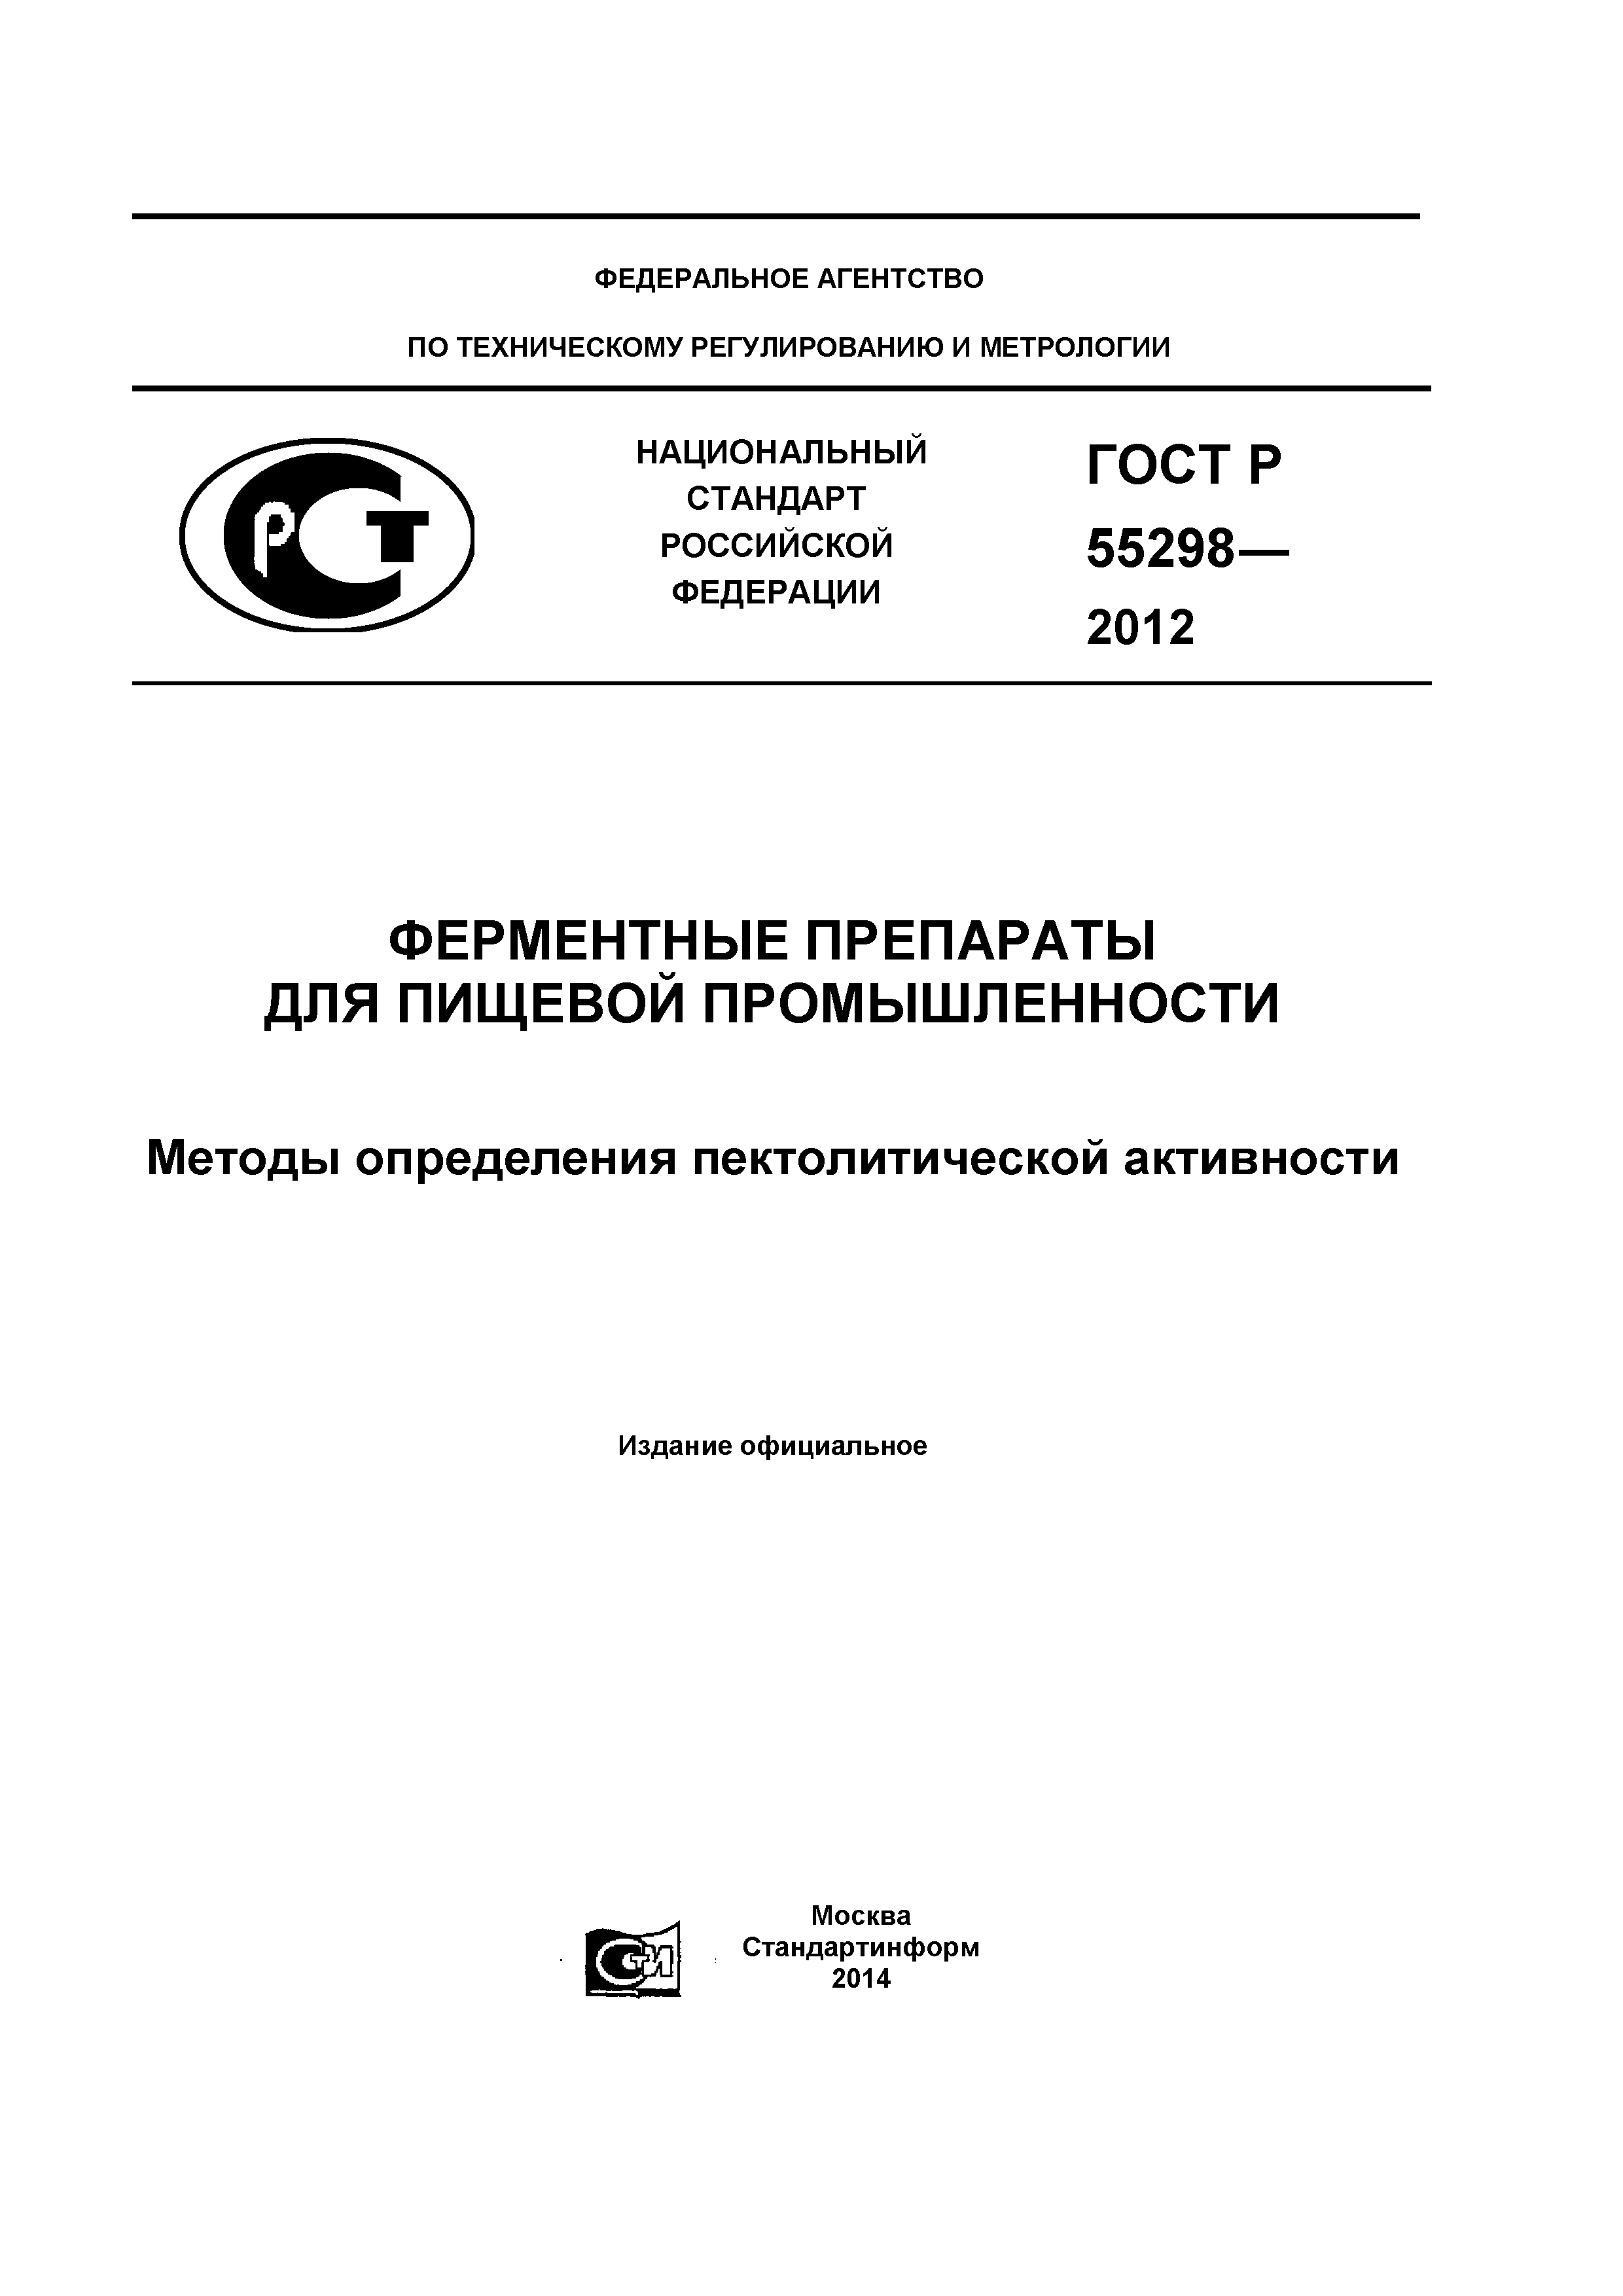 ГОСТ Р 55298-2012